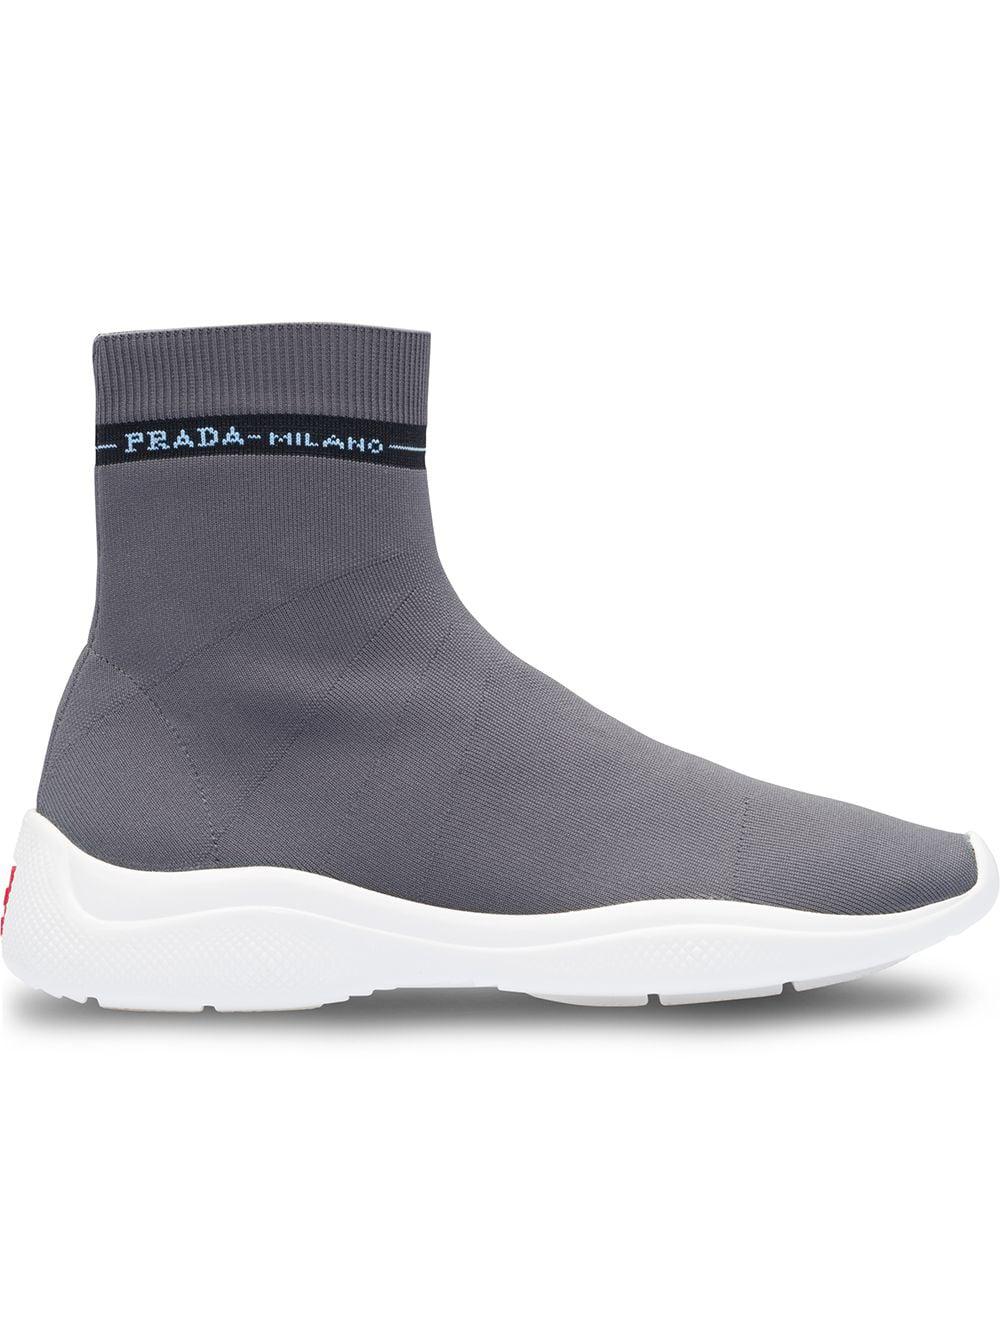 Prada Rubber Sock Sneakers in Grey (Gray) | Lyst